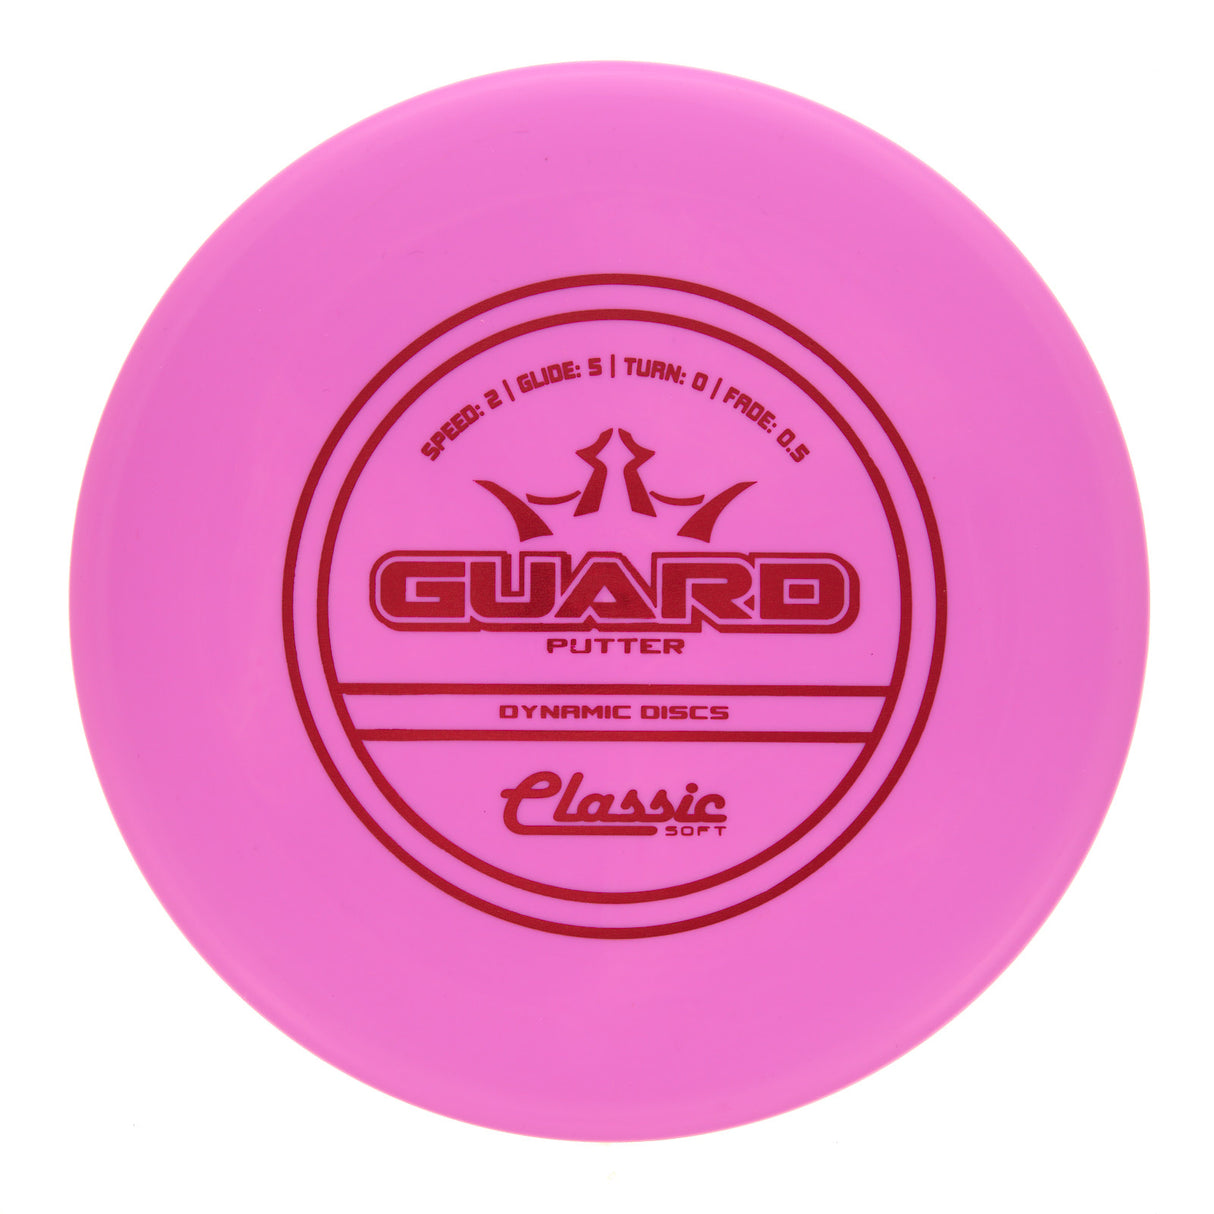 Dynamic Discs Guard - Classic Soft 173g | Style 0005